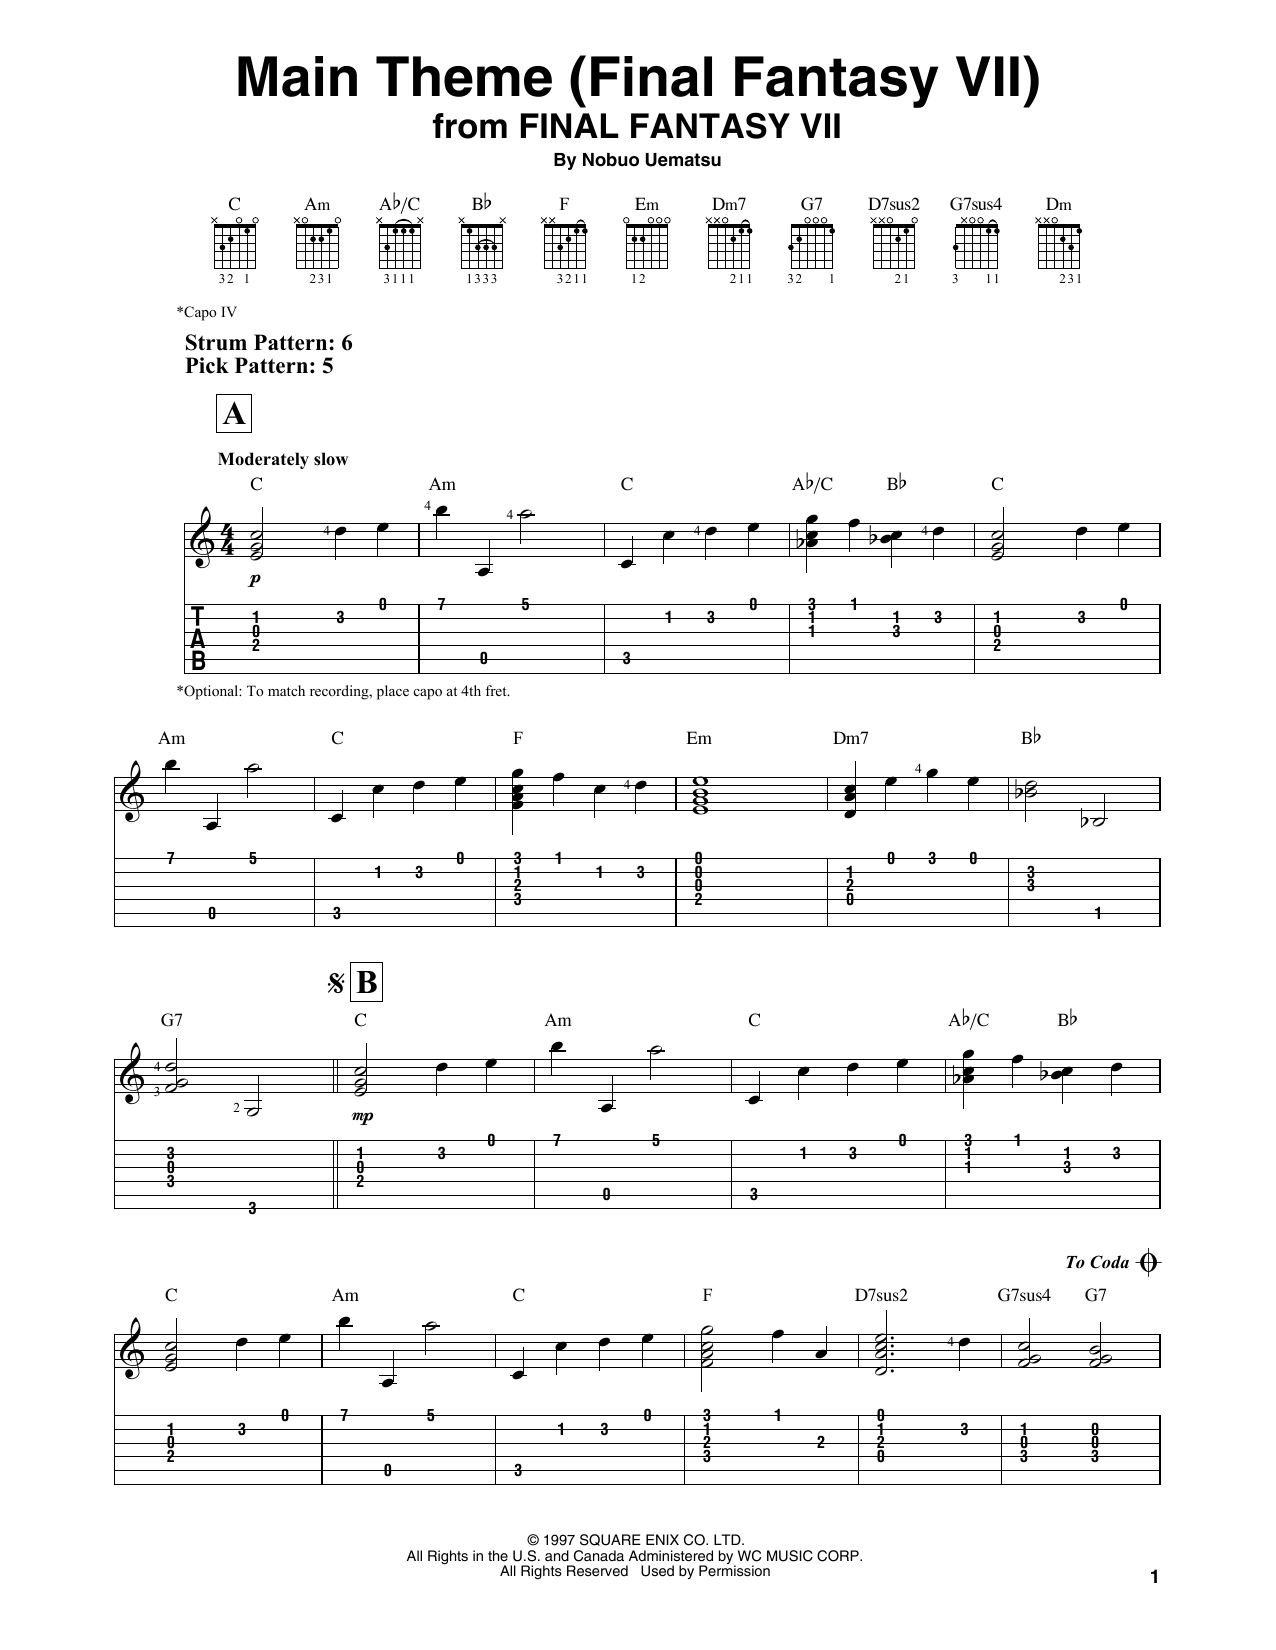 Nobuo Uematsu Main Theme (Final Fantasy VII) sheet music notes and chords arranged for Easy Guitar Tab